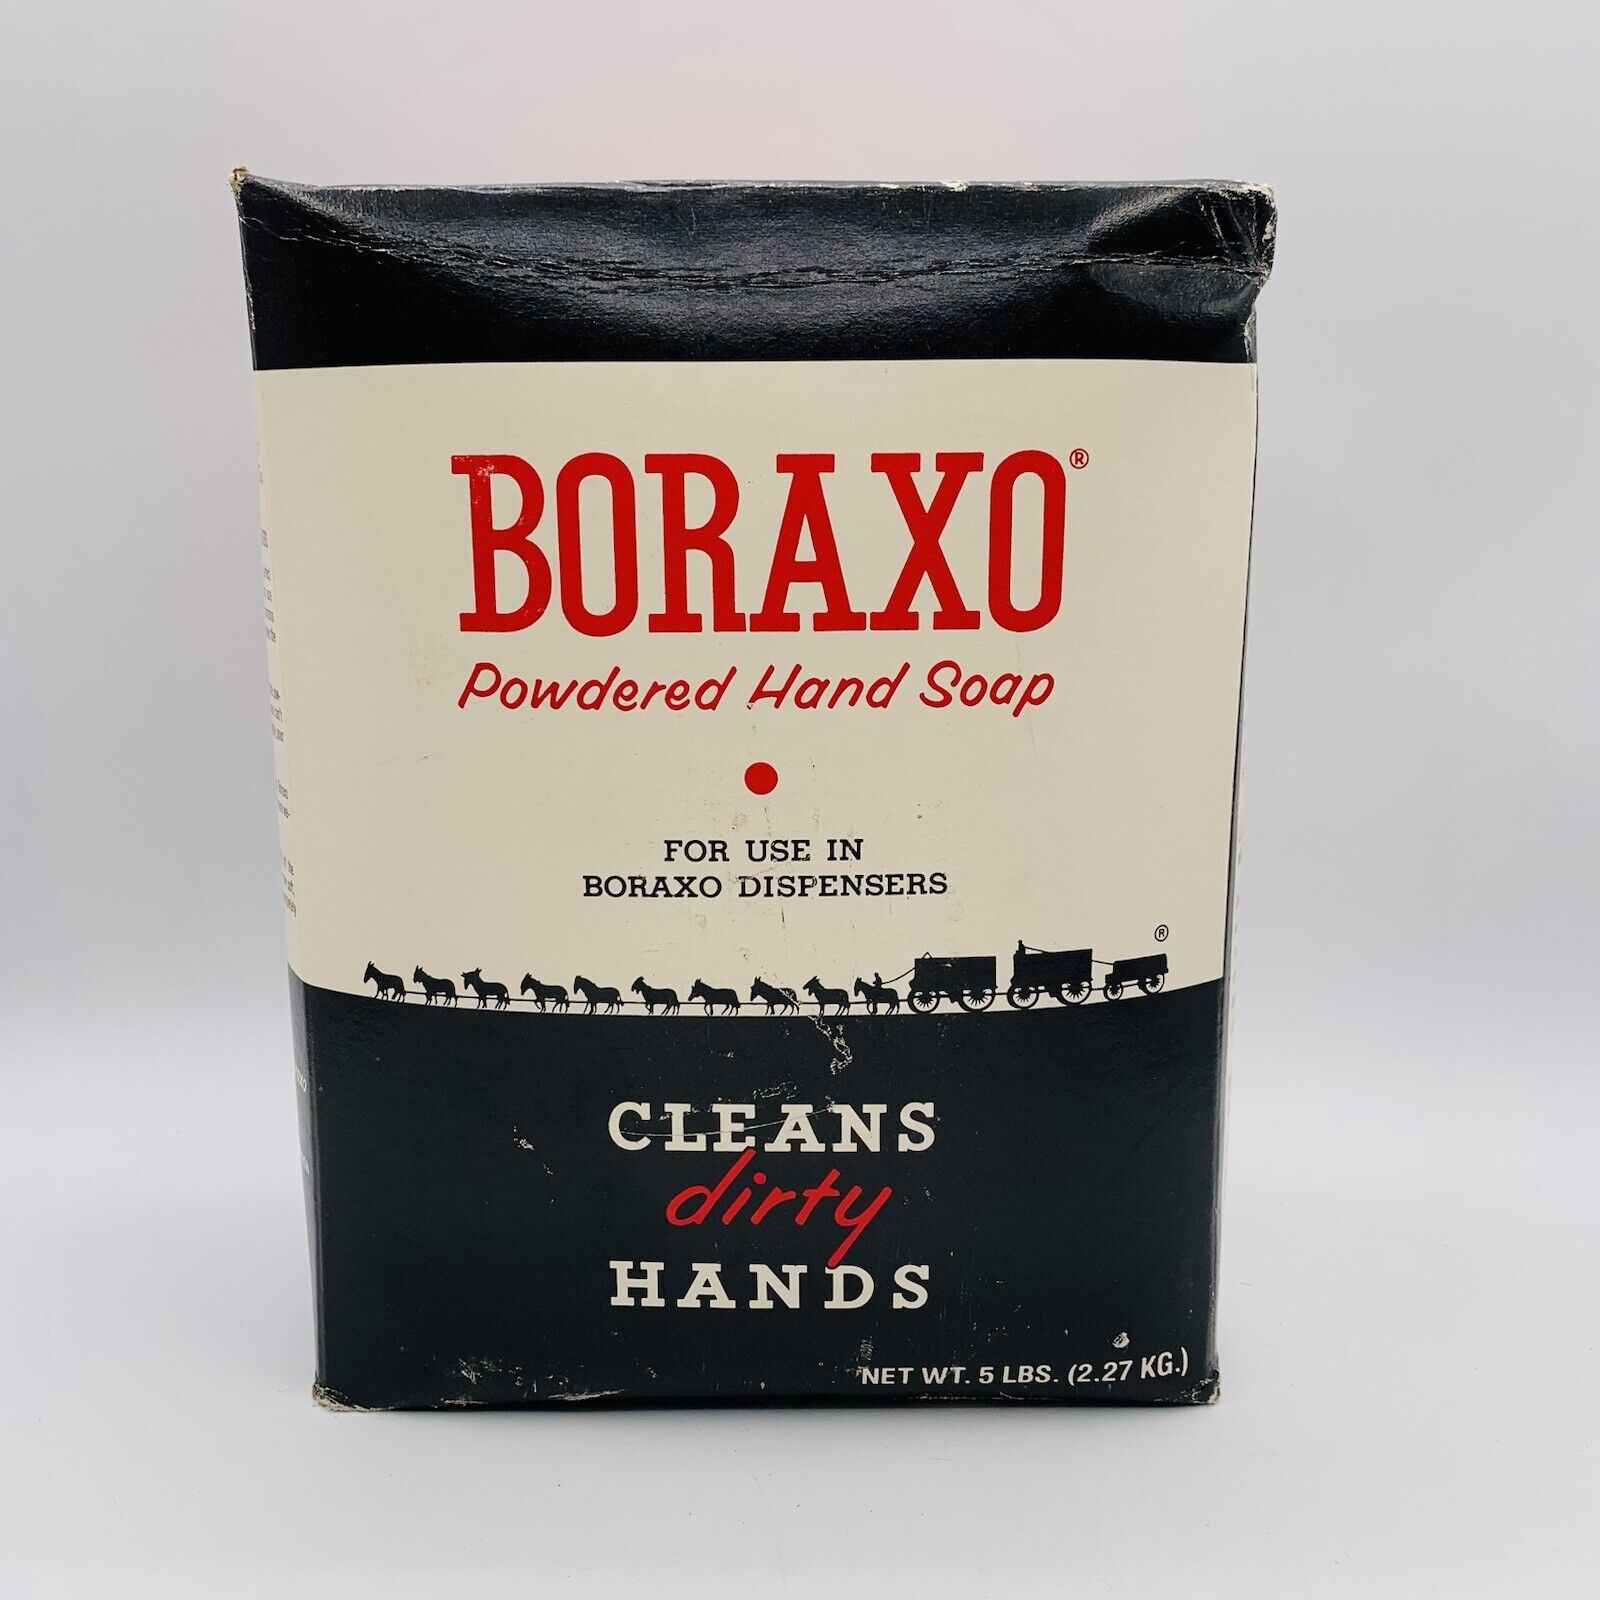 VTG 1940s or 1950s Boraxo Powdered Hand Soap 5 LB Box NOS 20 Mule Team US Borax